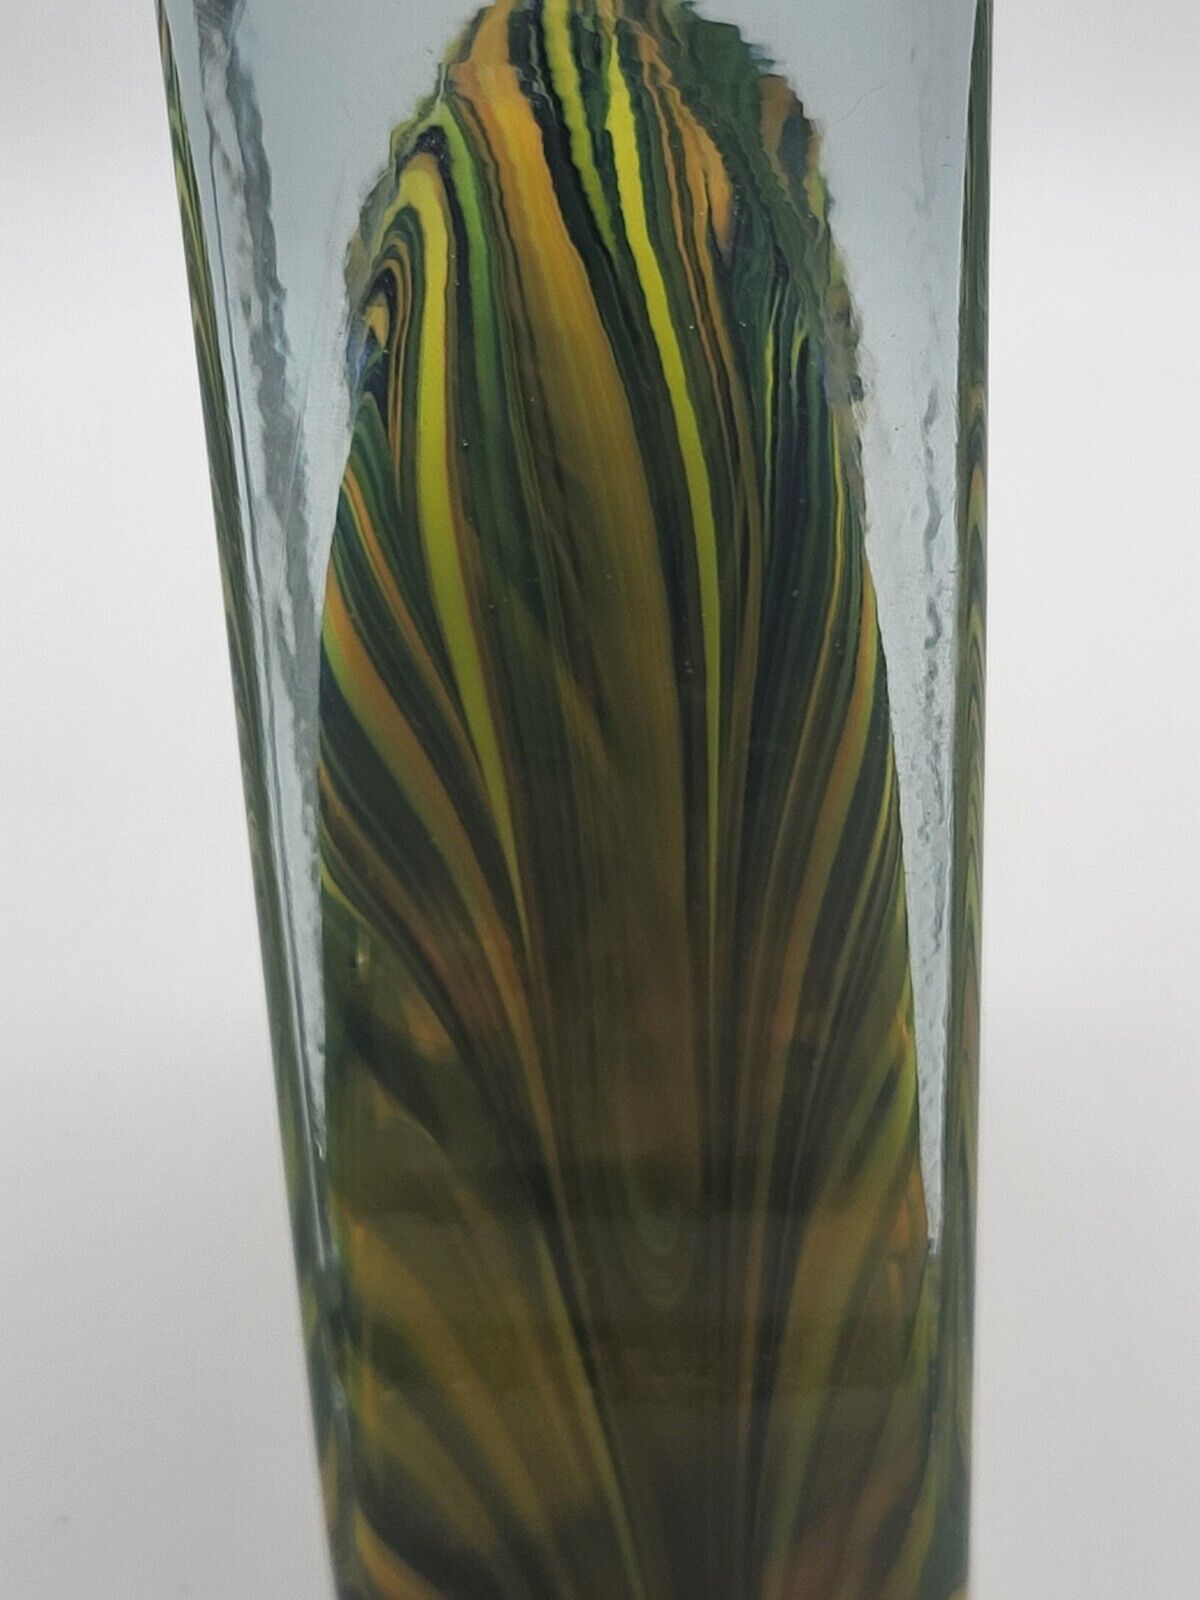 MCM Glass Vase Green Yellow Wavy Art Glass Cubist Murano Rectangle Narrow